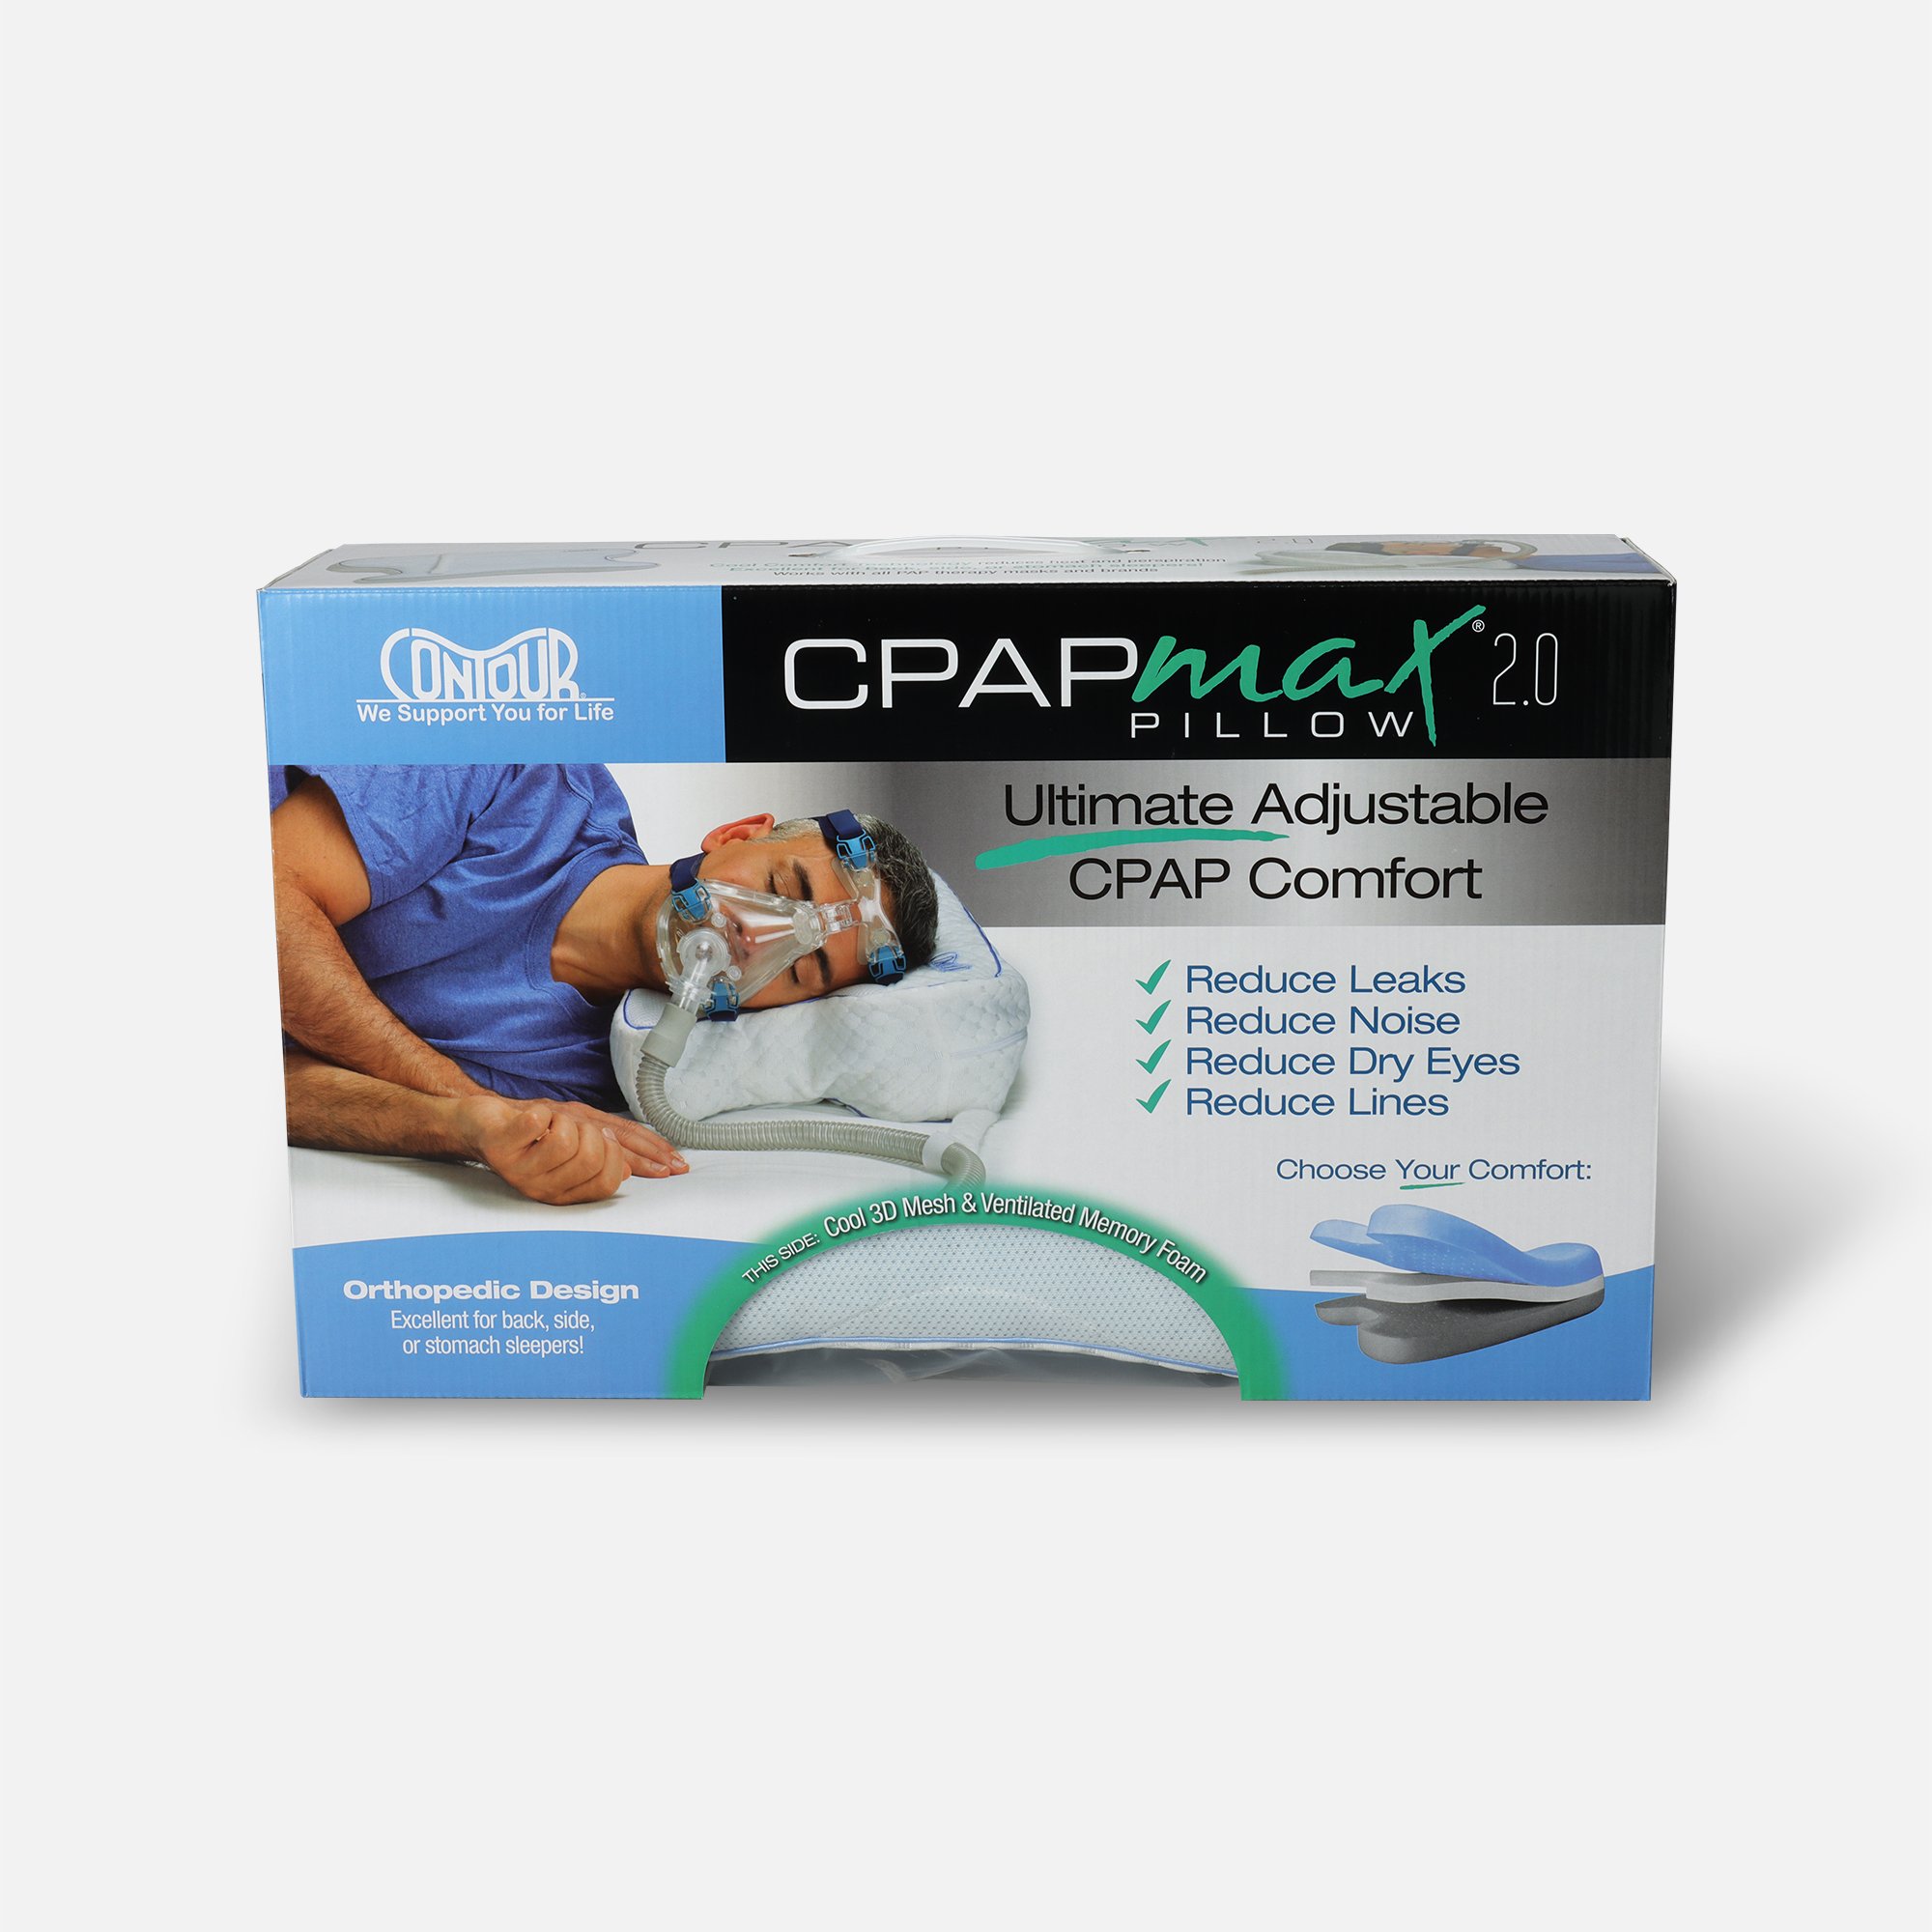 HSA Eligible | Contour CPAP Max Pillow 2.0